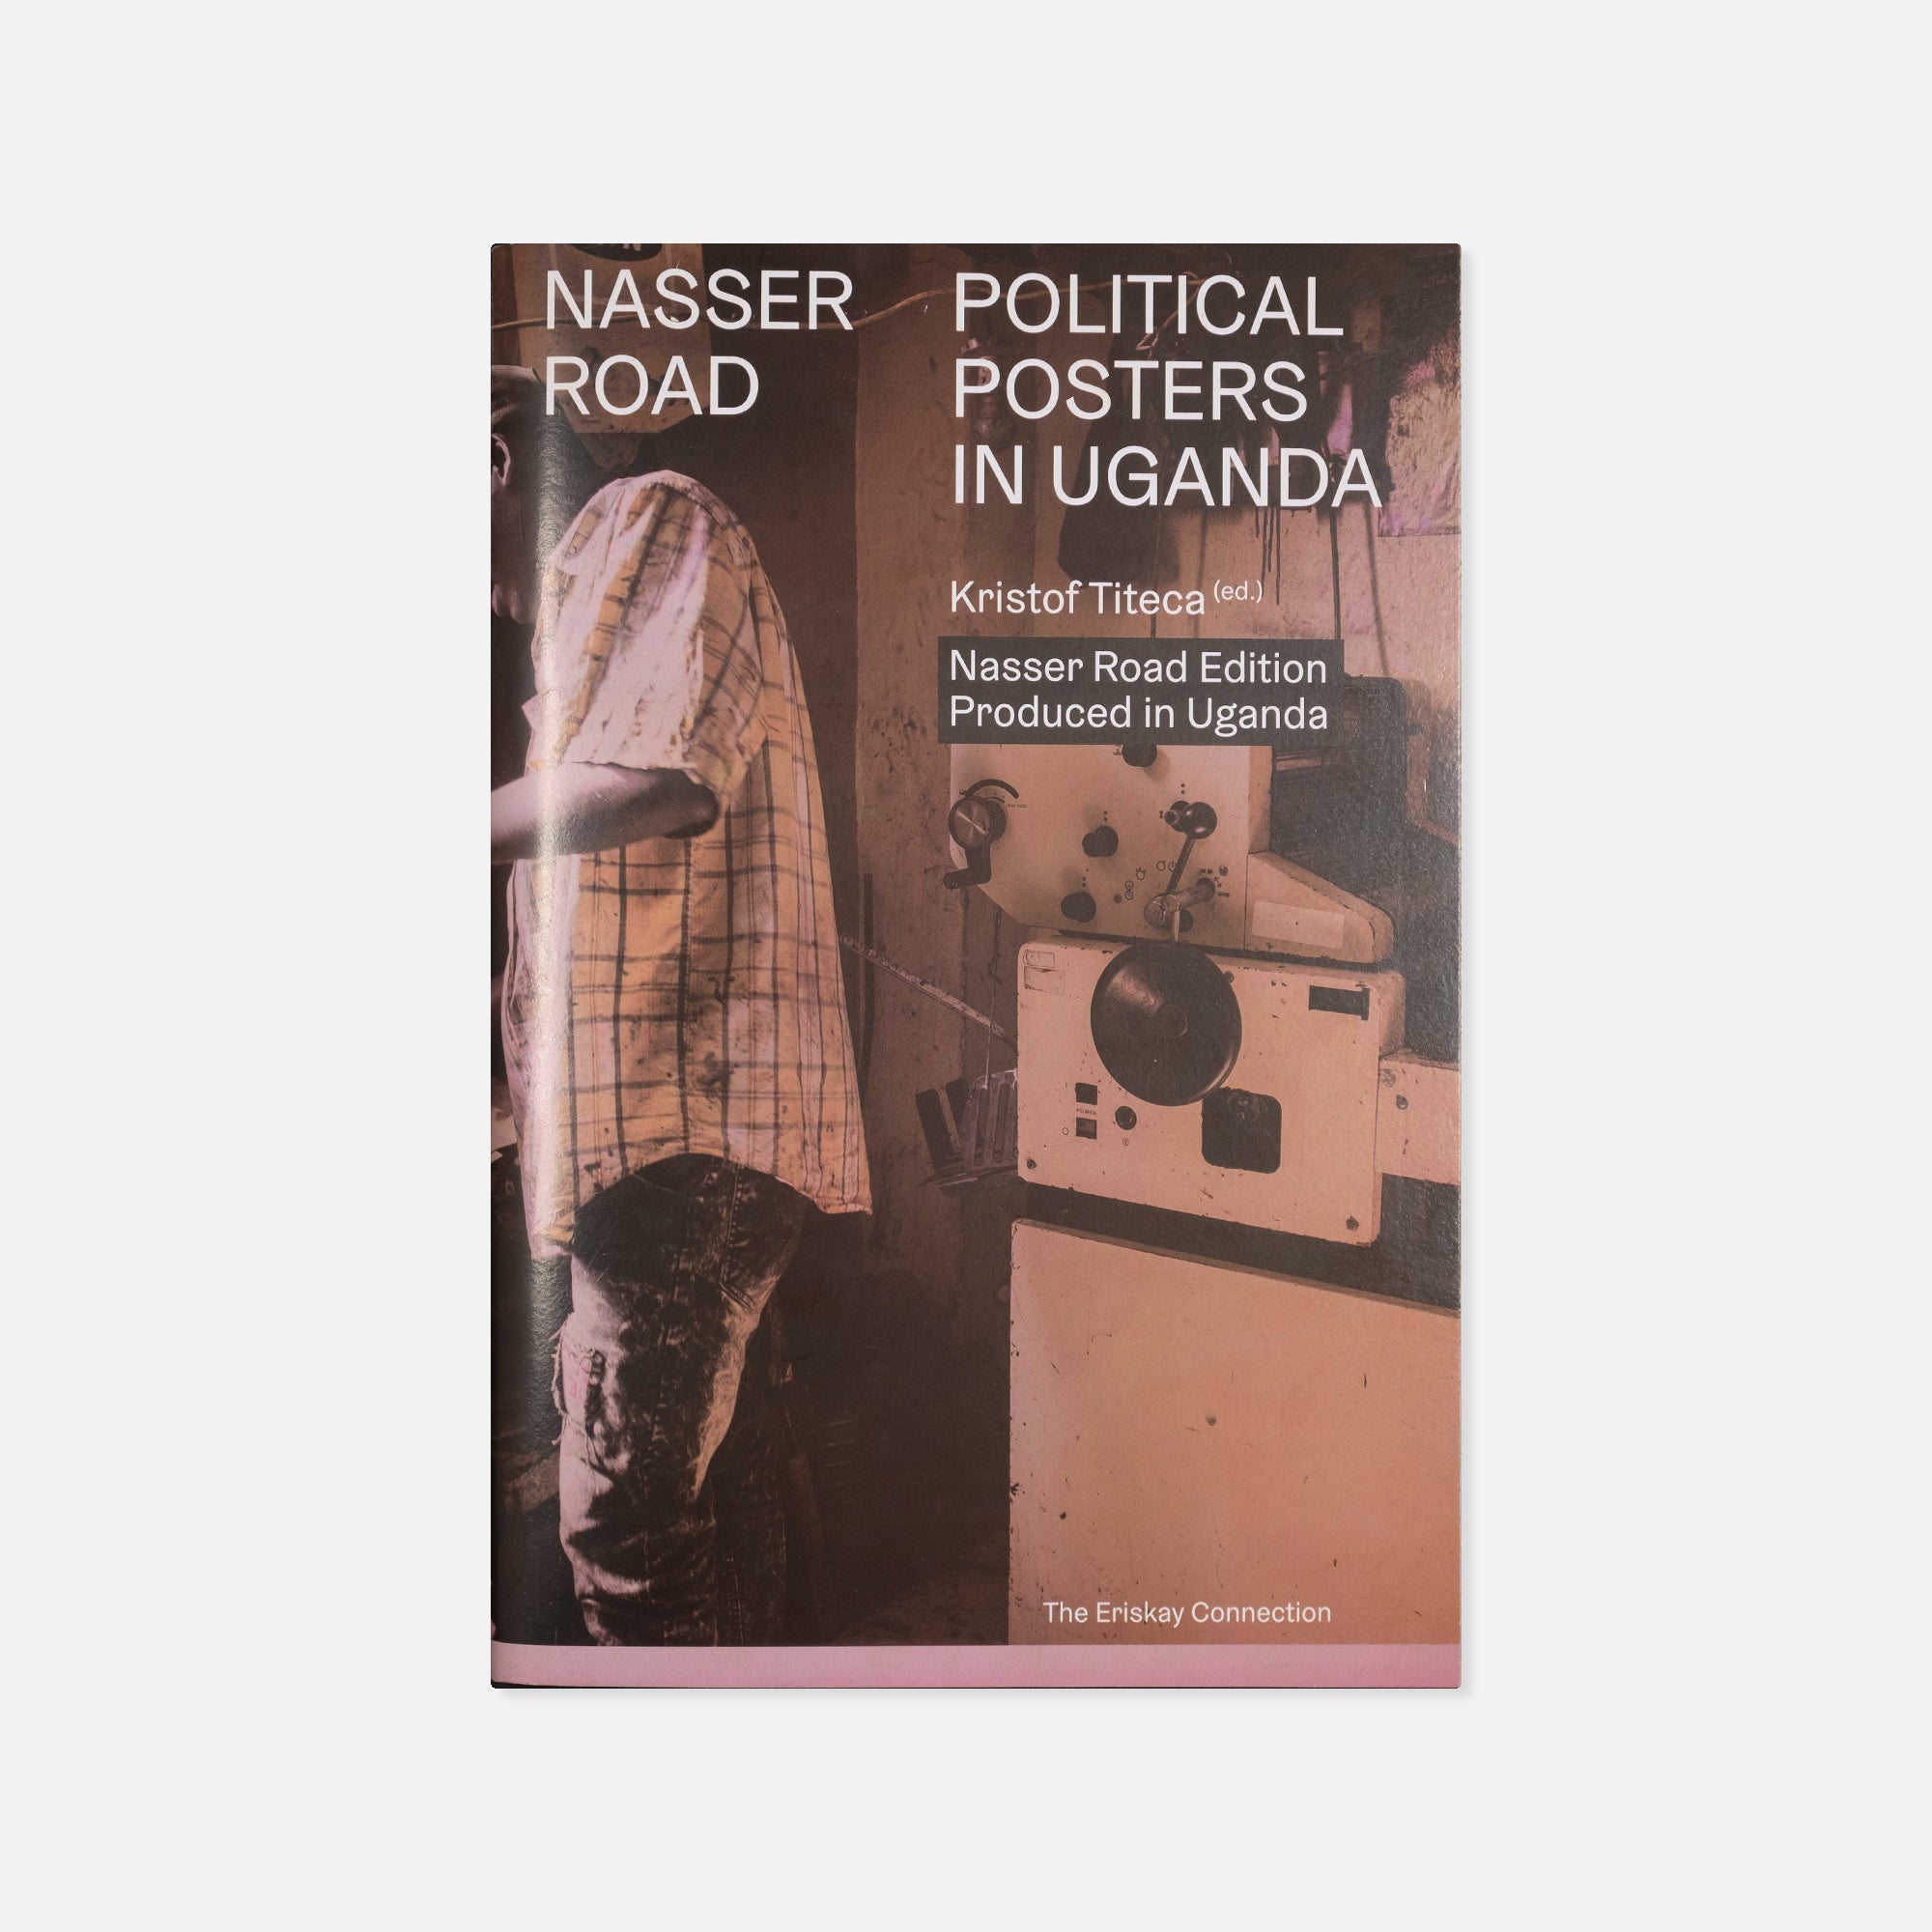 Kristof Titeca (ed.) — Nasser Road: Political Posters in Uganda (Nasser Road Edition)